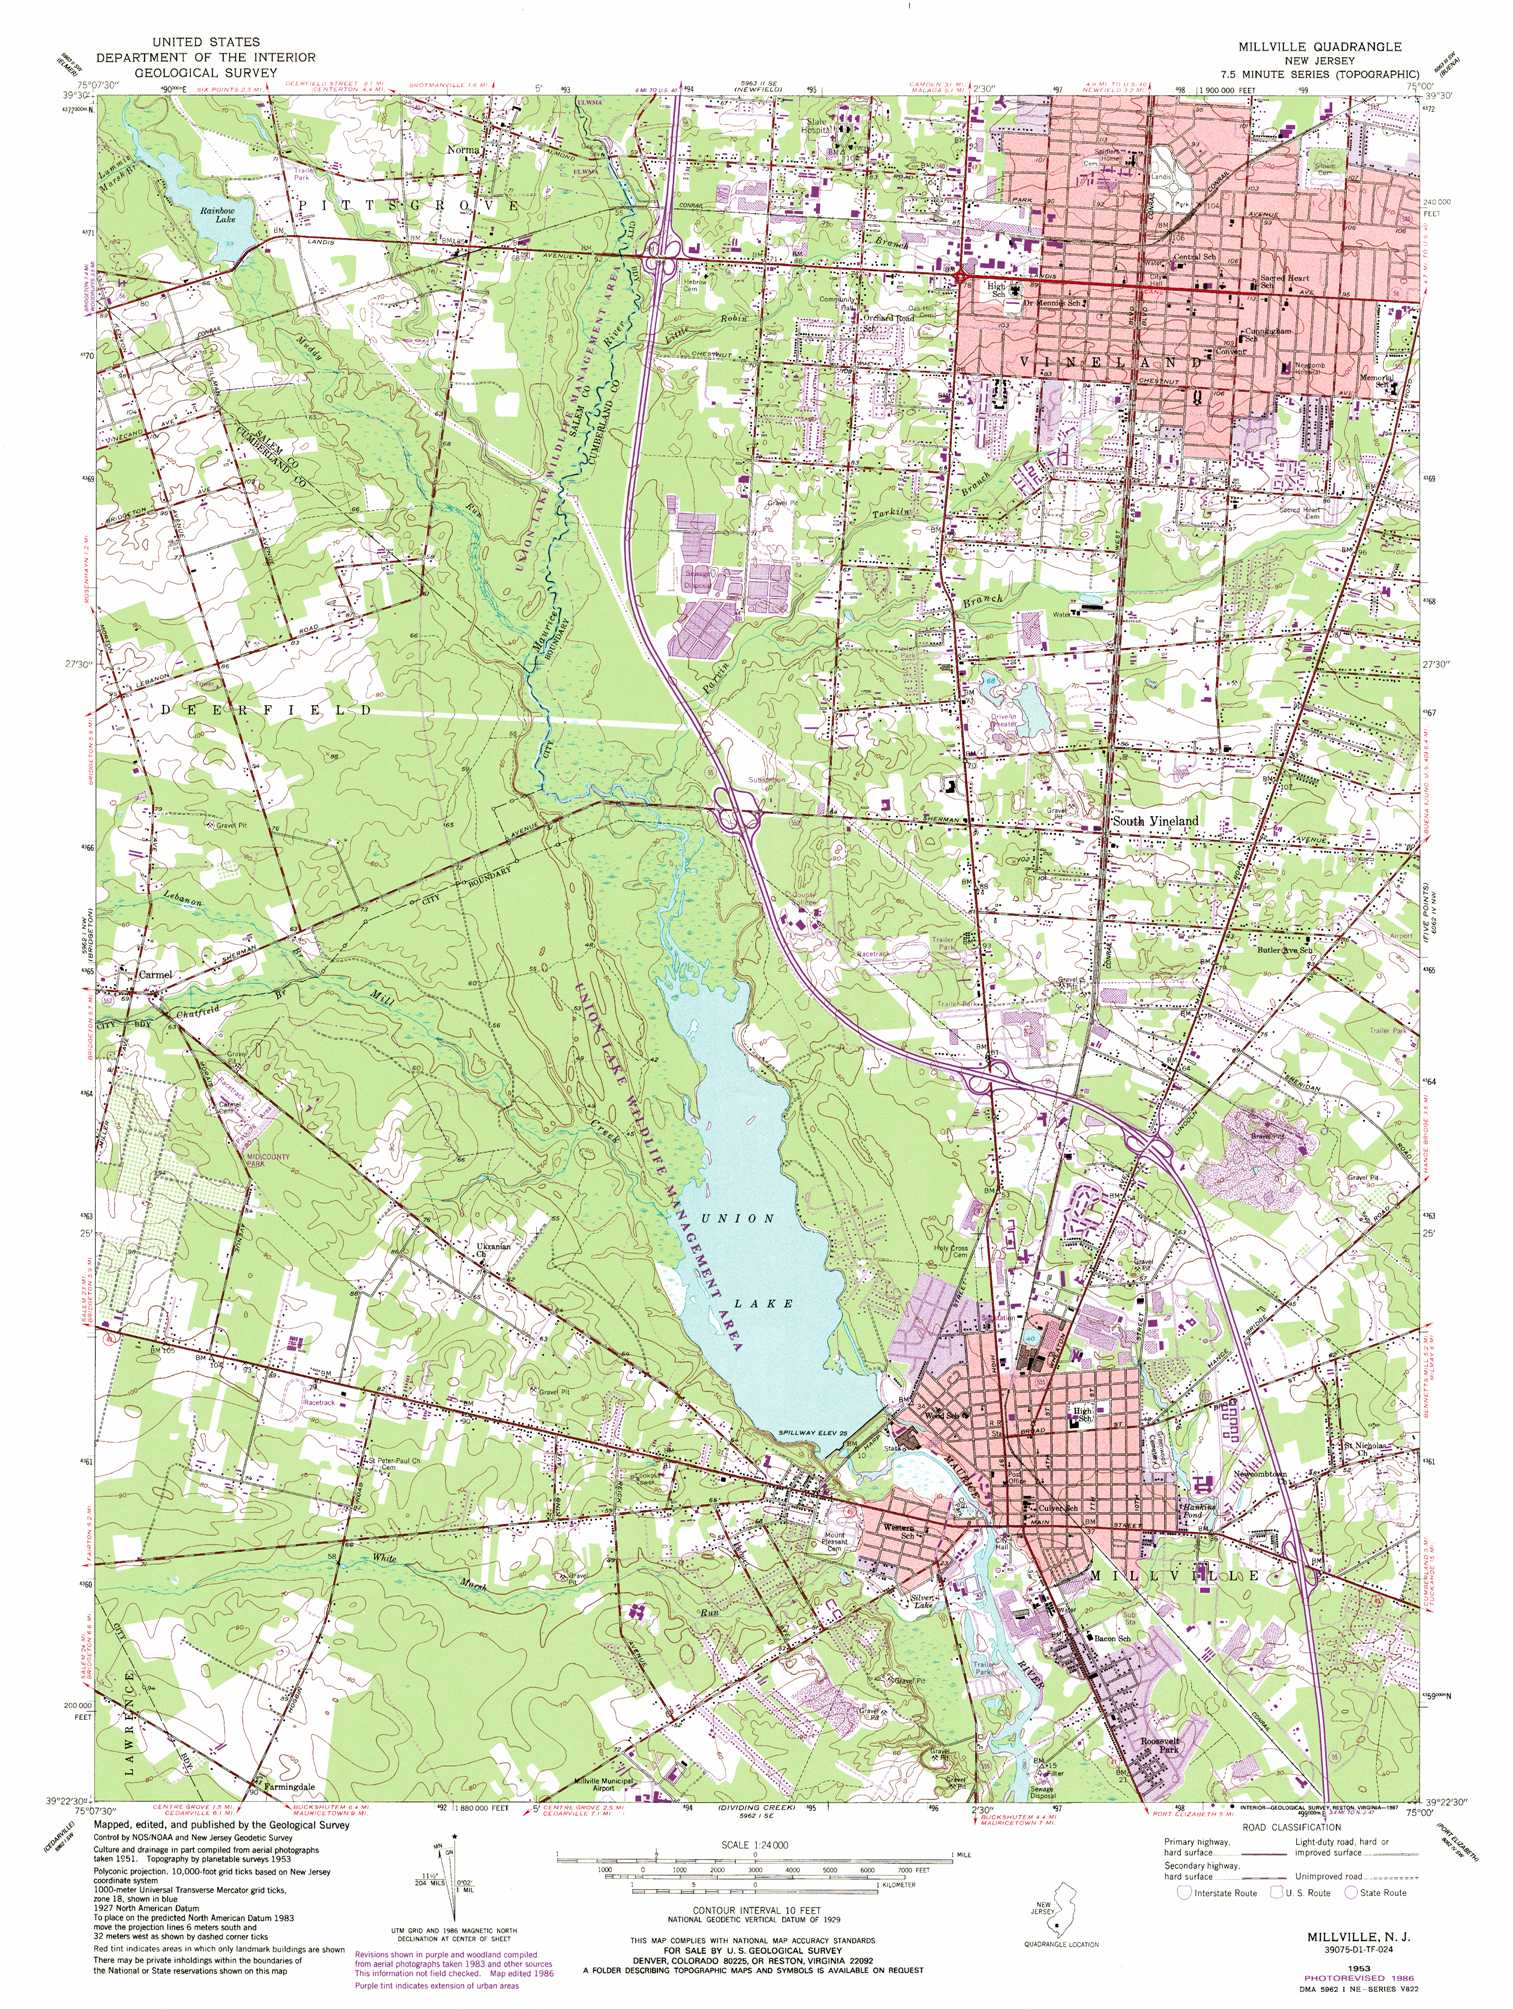 Millville topographic map, NJ - USGS Topo Quad 39075d1